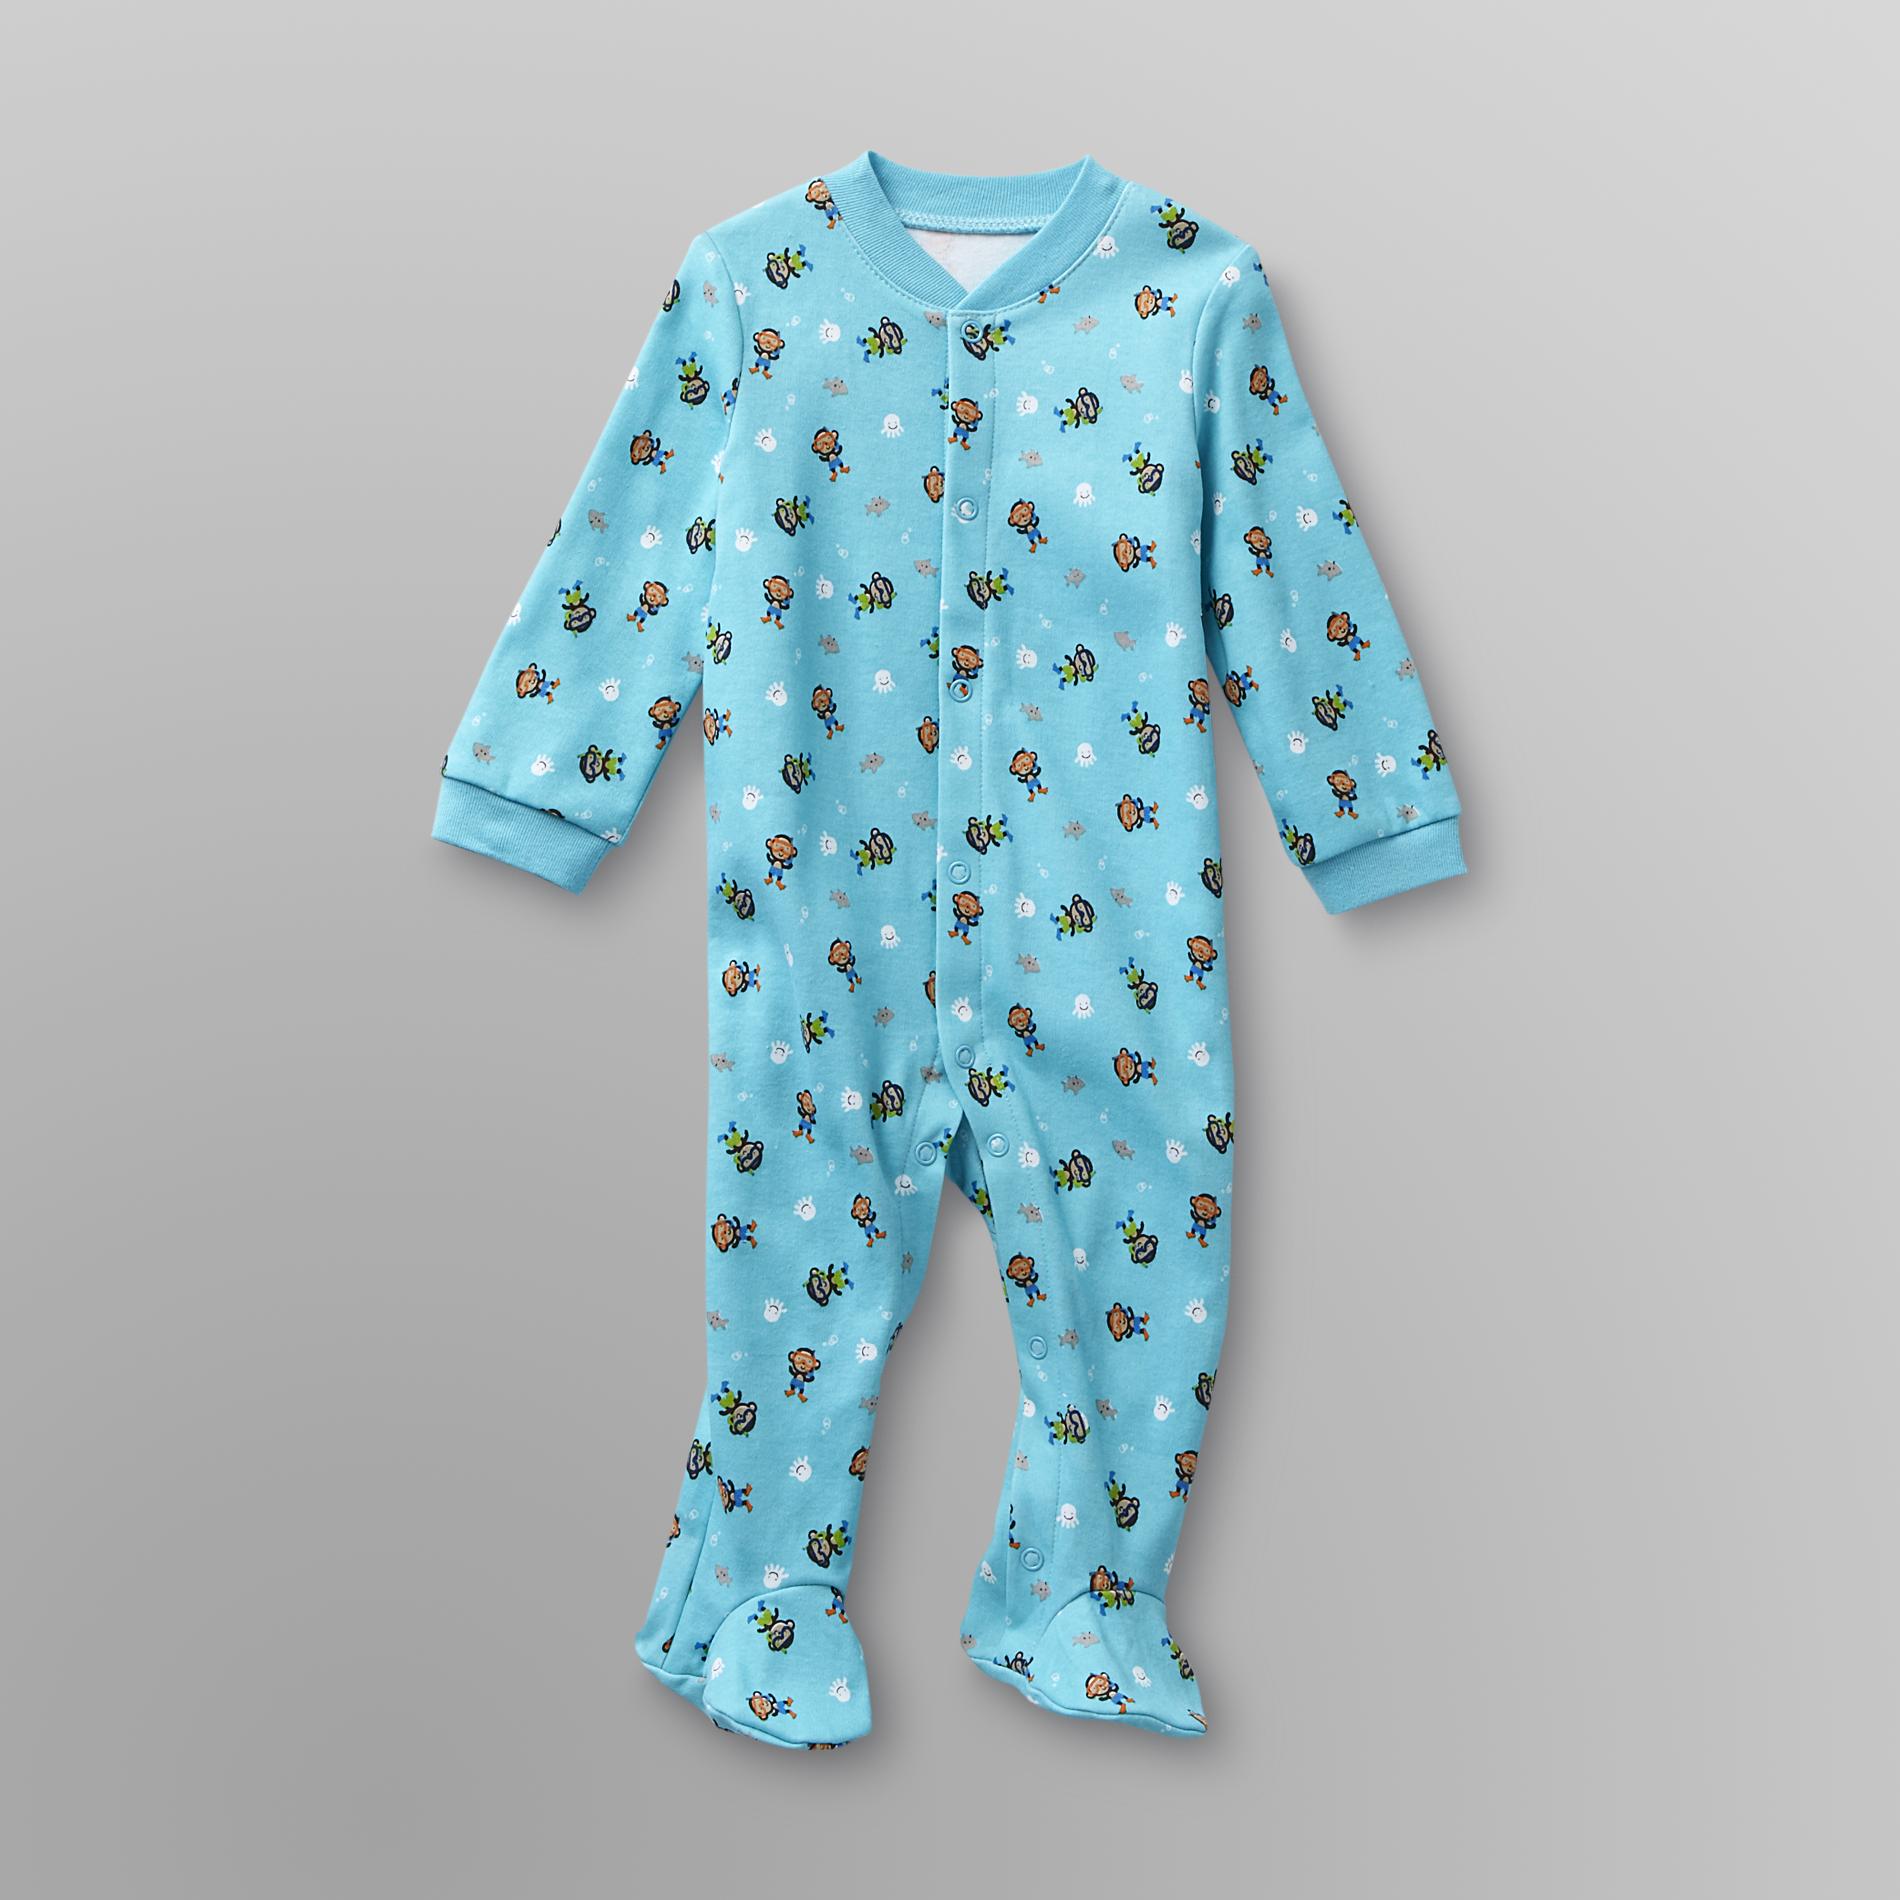 Small Wonders Infant Boy's Footed Pajamas - Scuba Monkeys